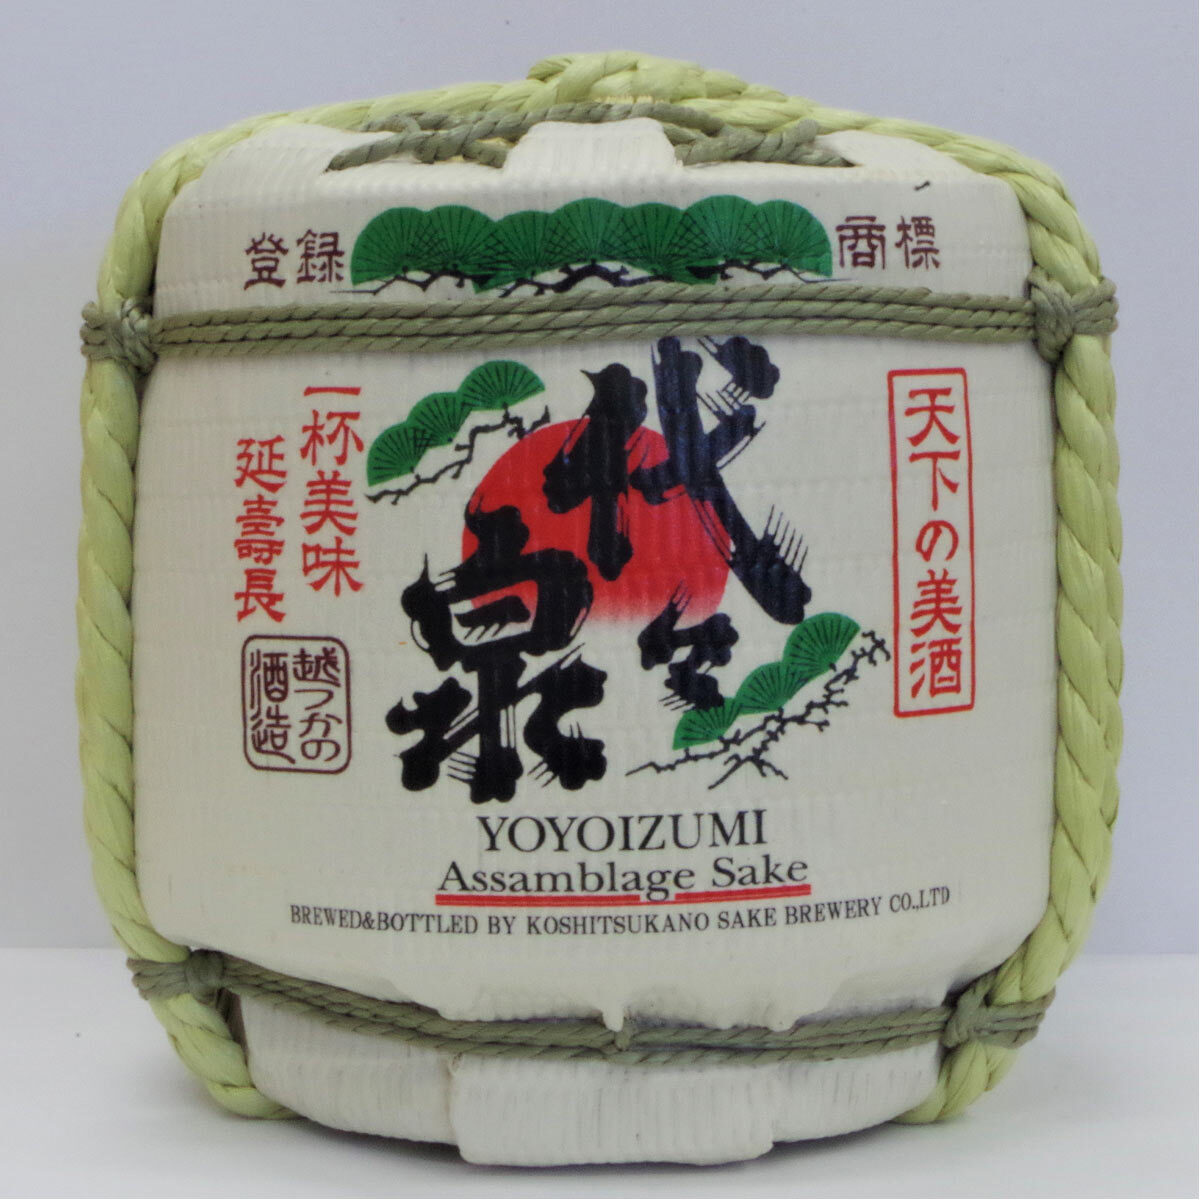 Image of a barrel of sake